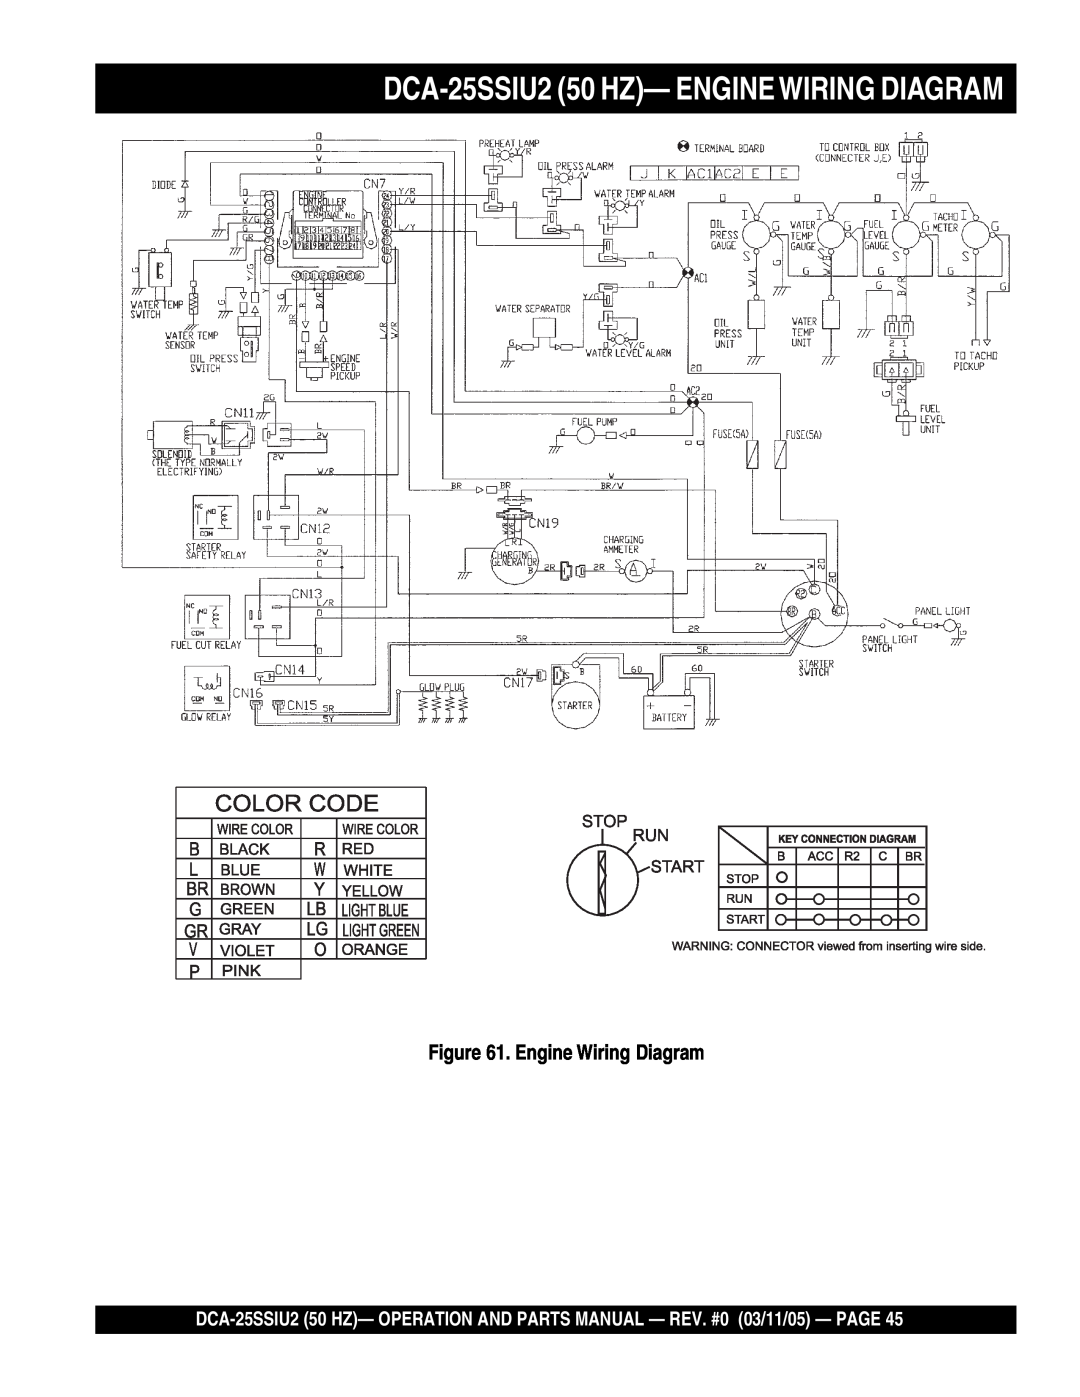 Multiquip operation manual DCA-25SSIU2 50 HZ- ENGINEWIRING DIAGRAM, Engine Wiring Diagram 